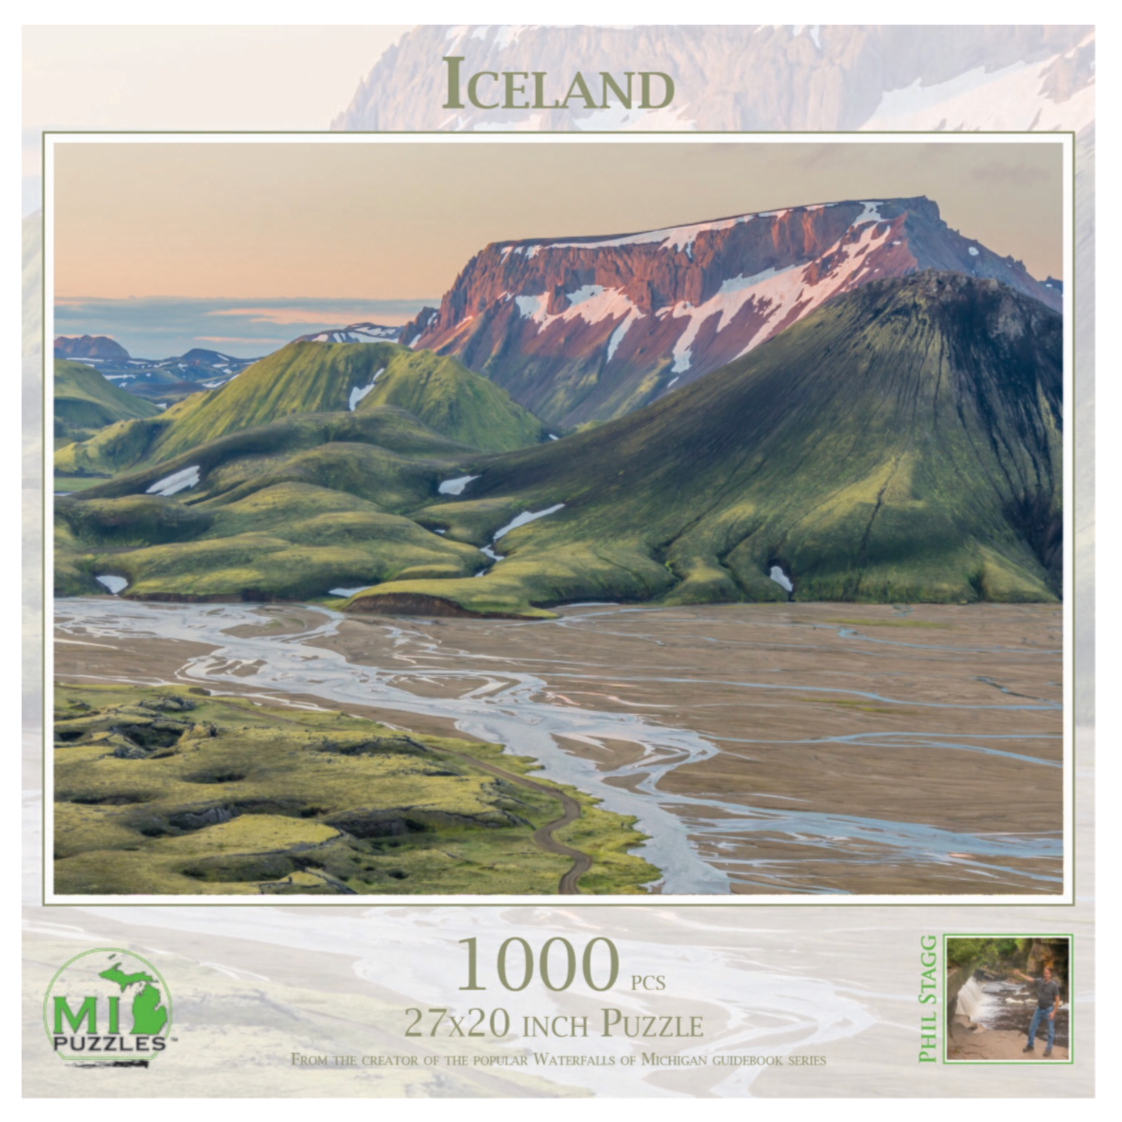 Iceland 1000 pc Jigsaw Puzzle